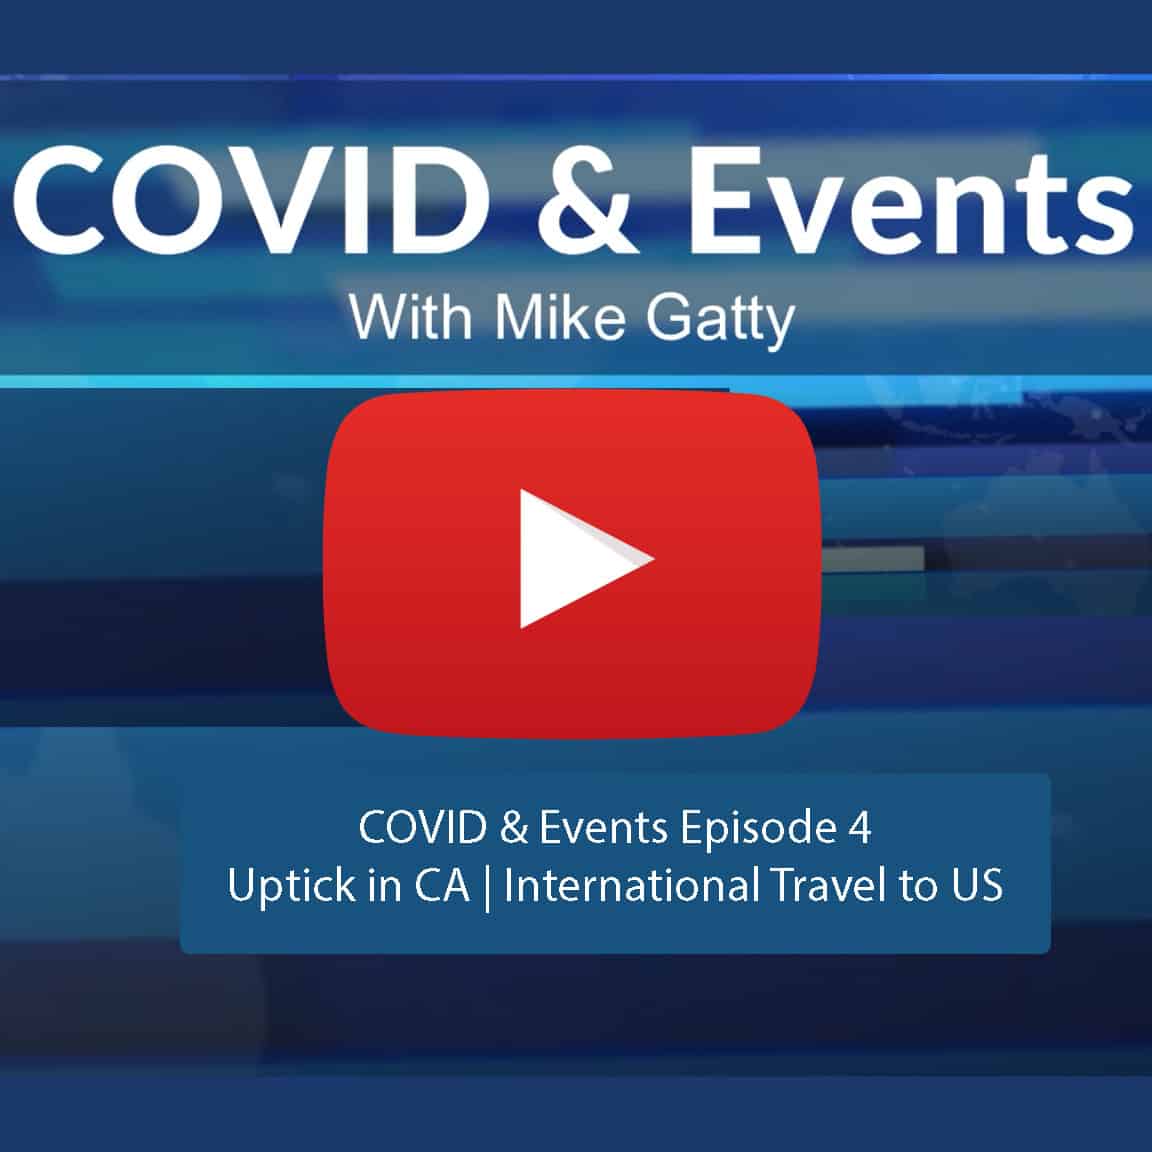 Covid & Events Episode 4